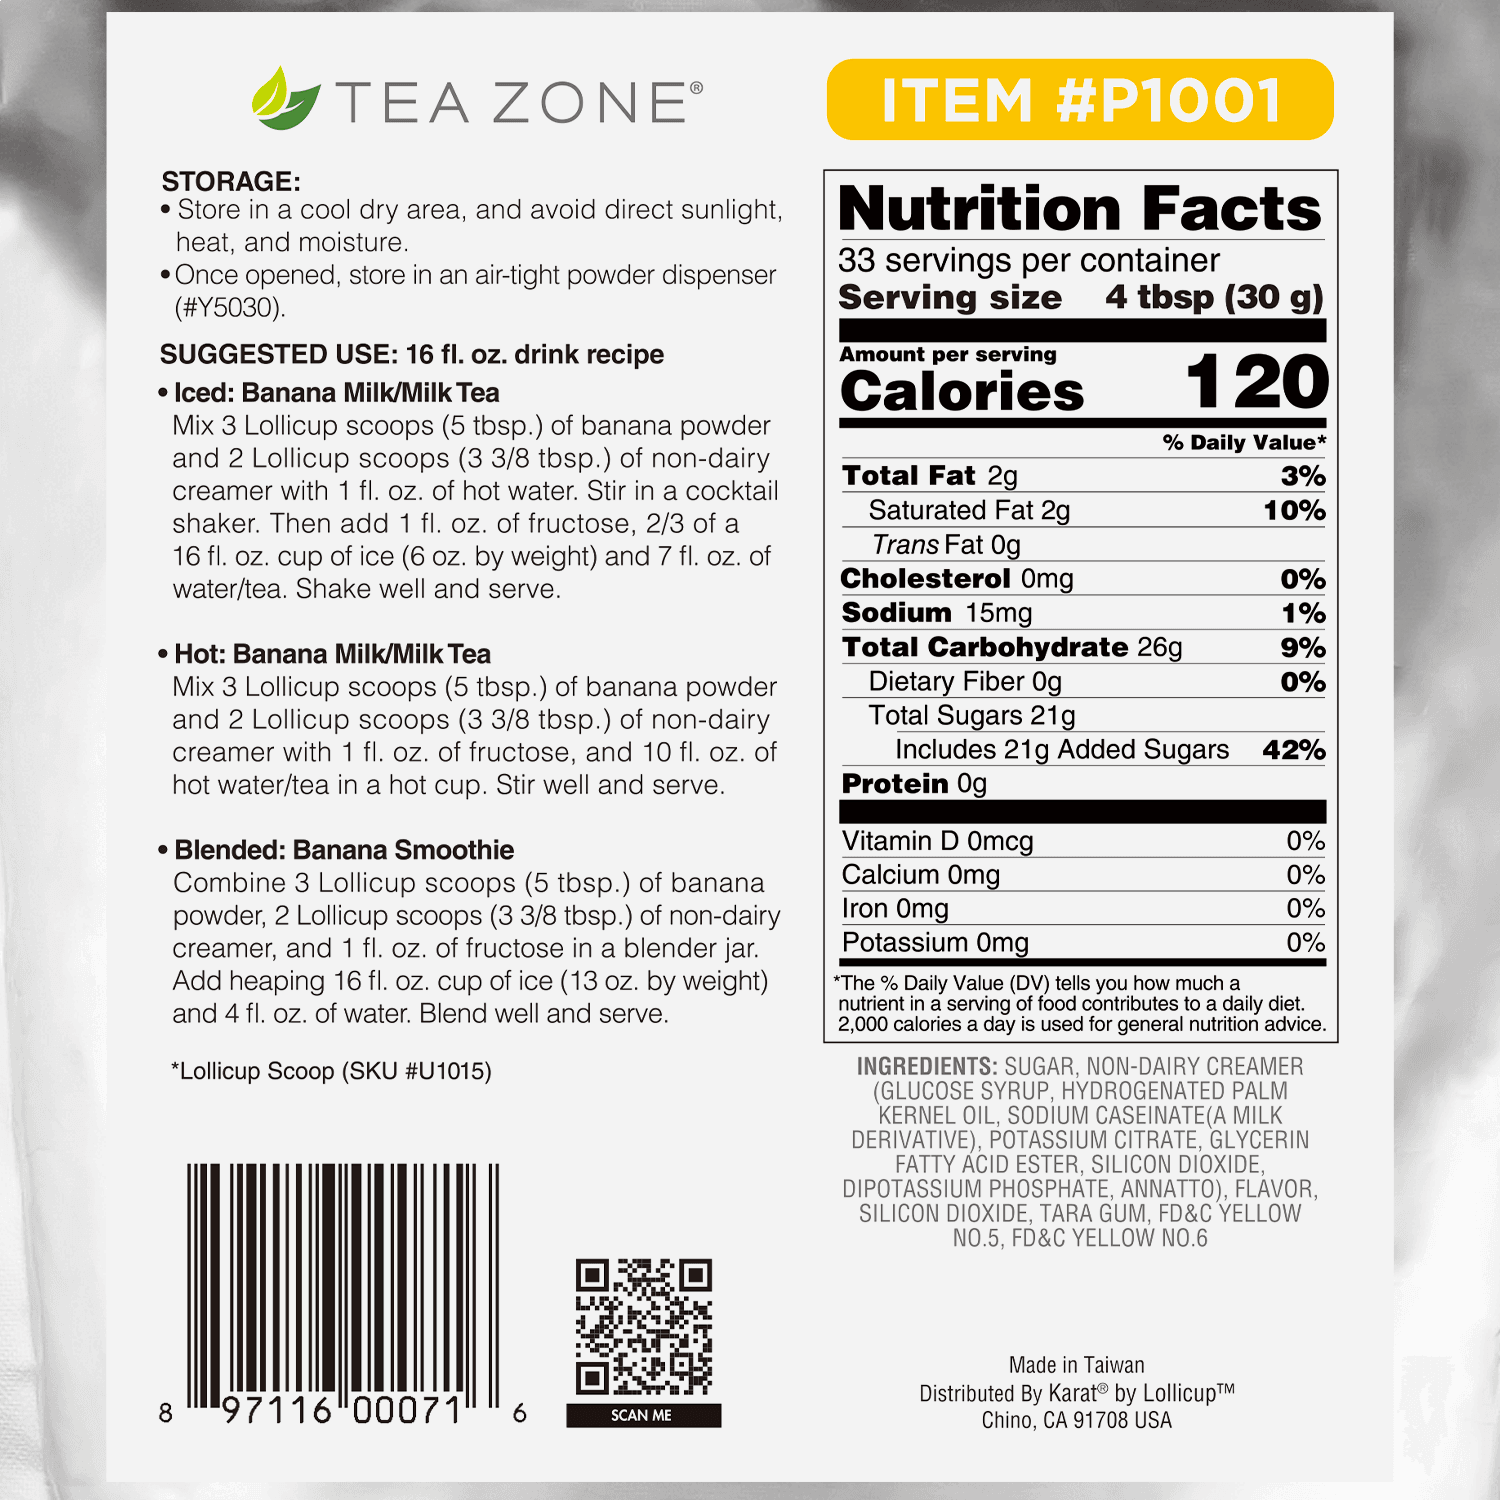 Tea Zone Banana Powder - Bag (2.2 lbs)